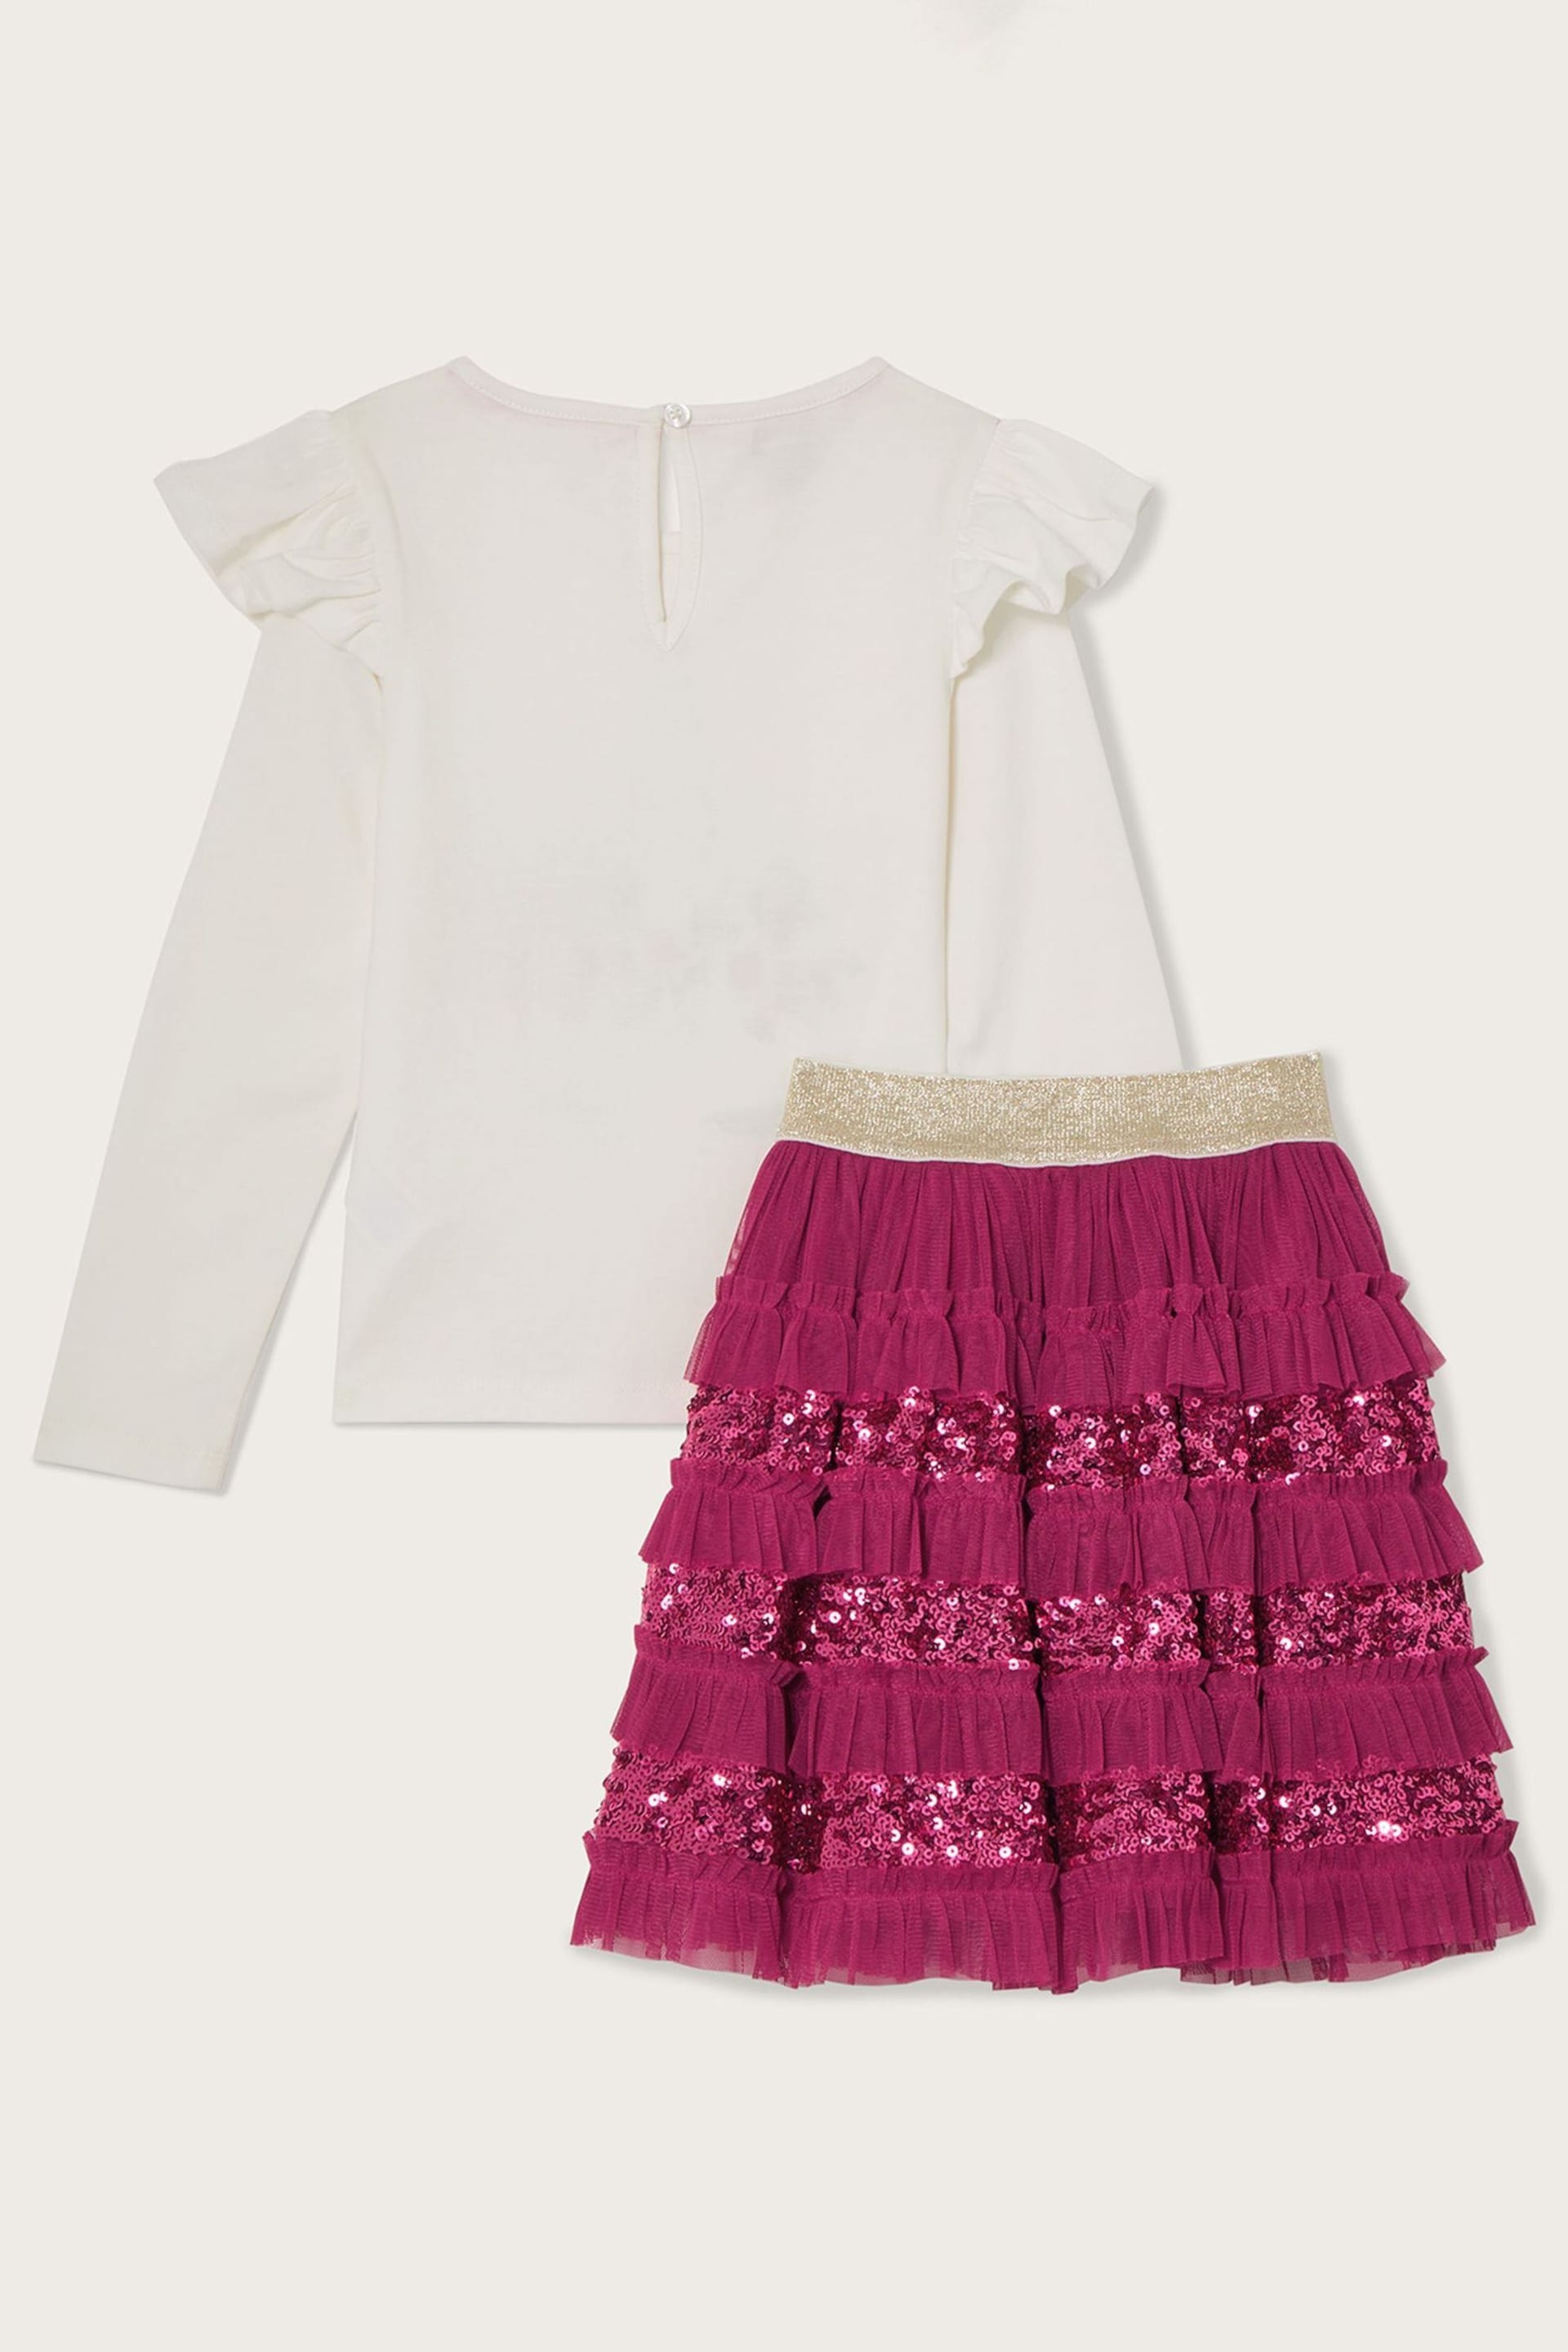 Monsoon Unicorn Top and Disco Skirt Set - Image 2 of 3